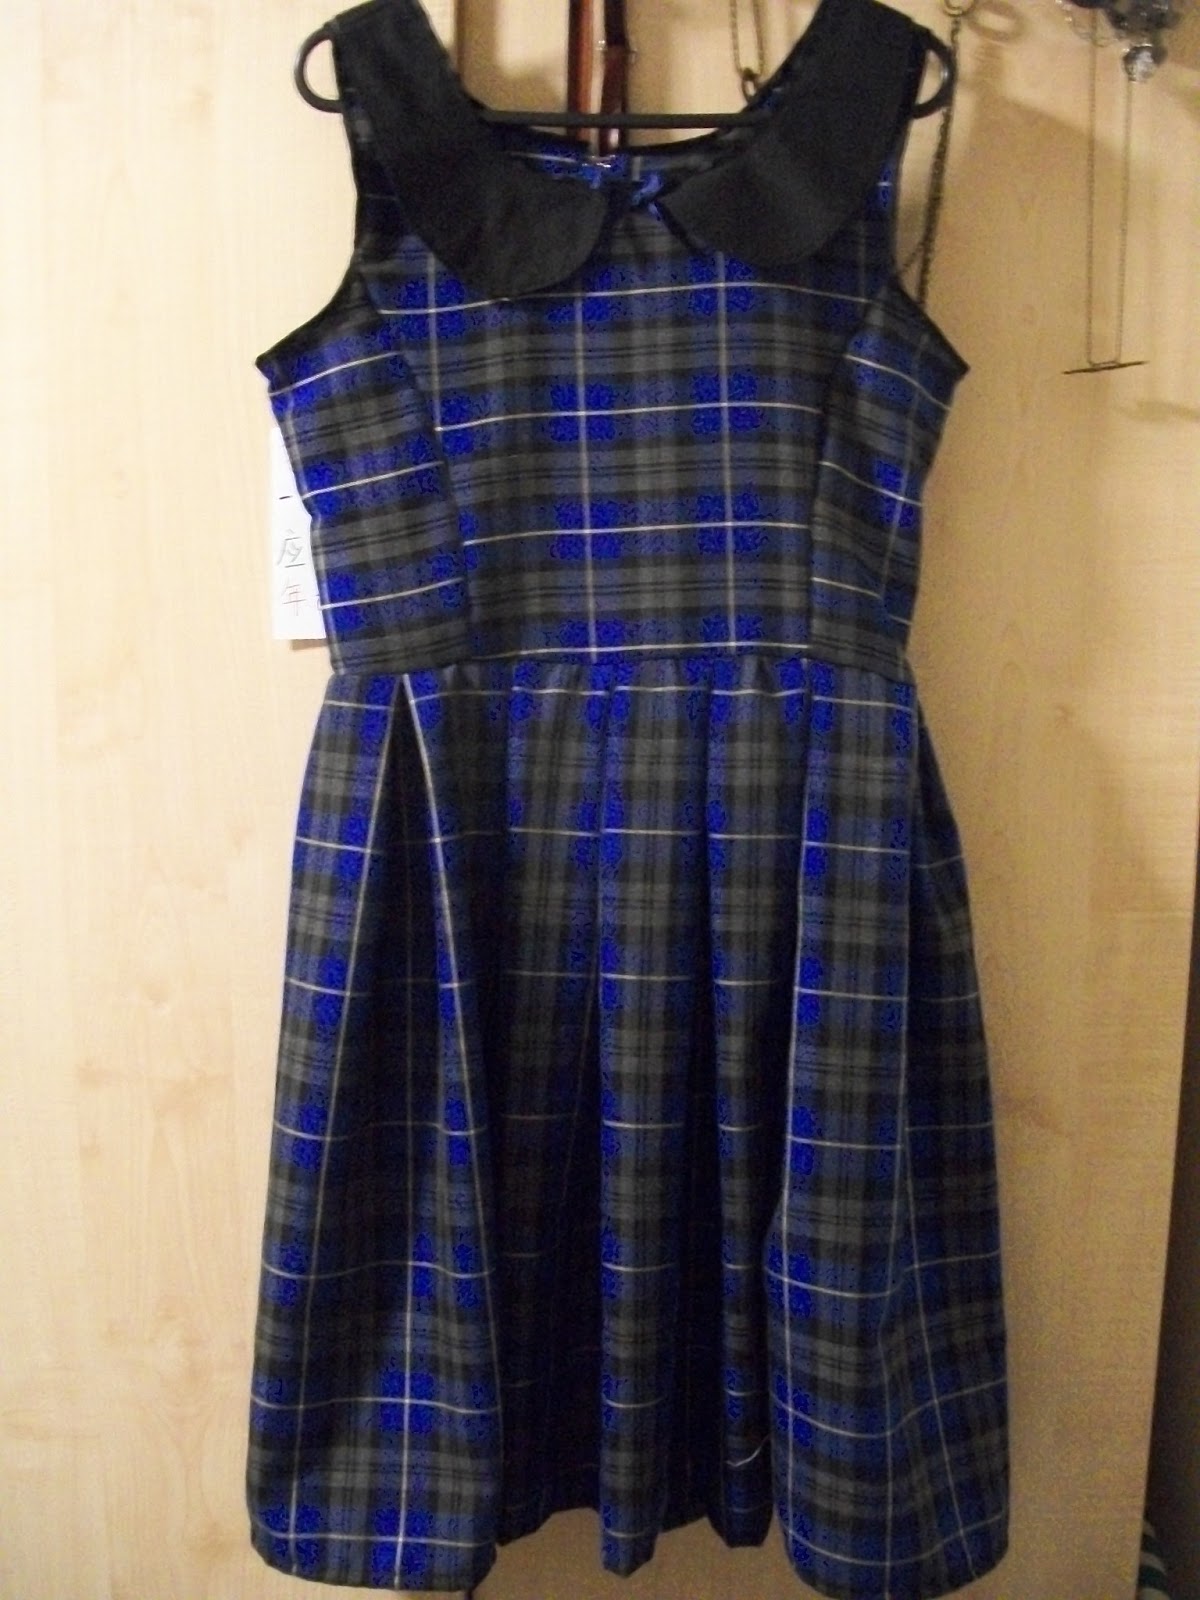 Plaid Dress Picture Collection | DressedUpGirl.com